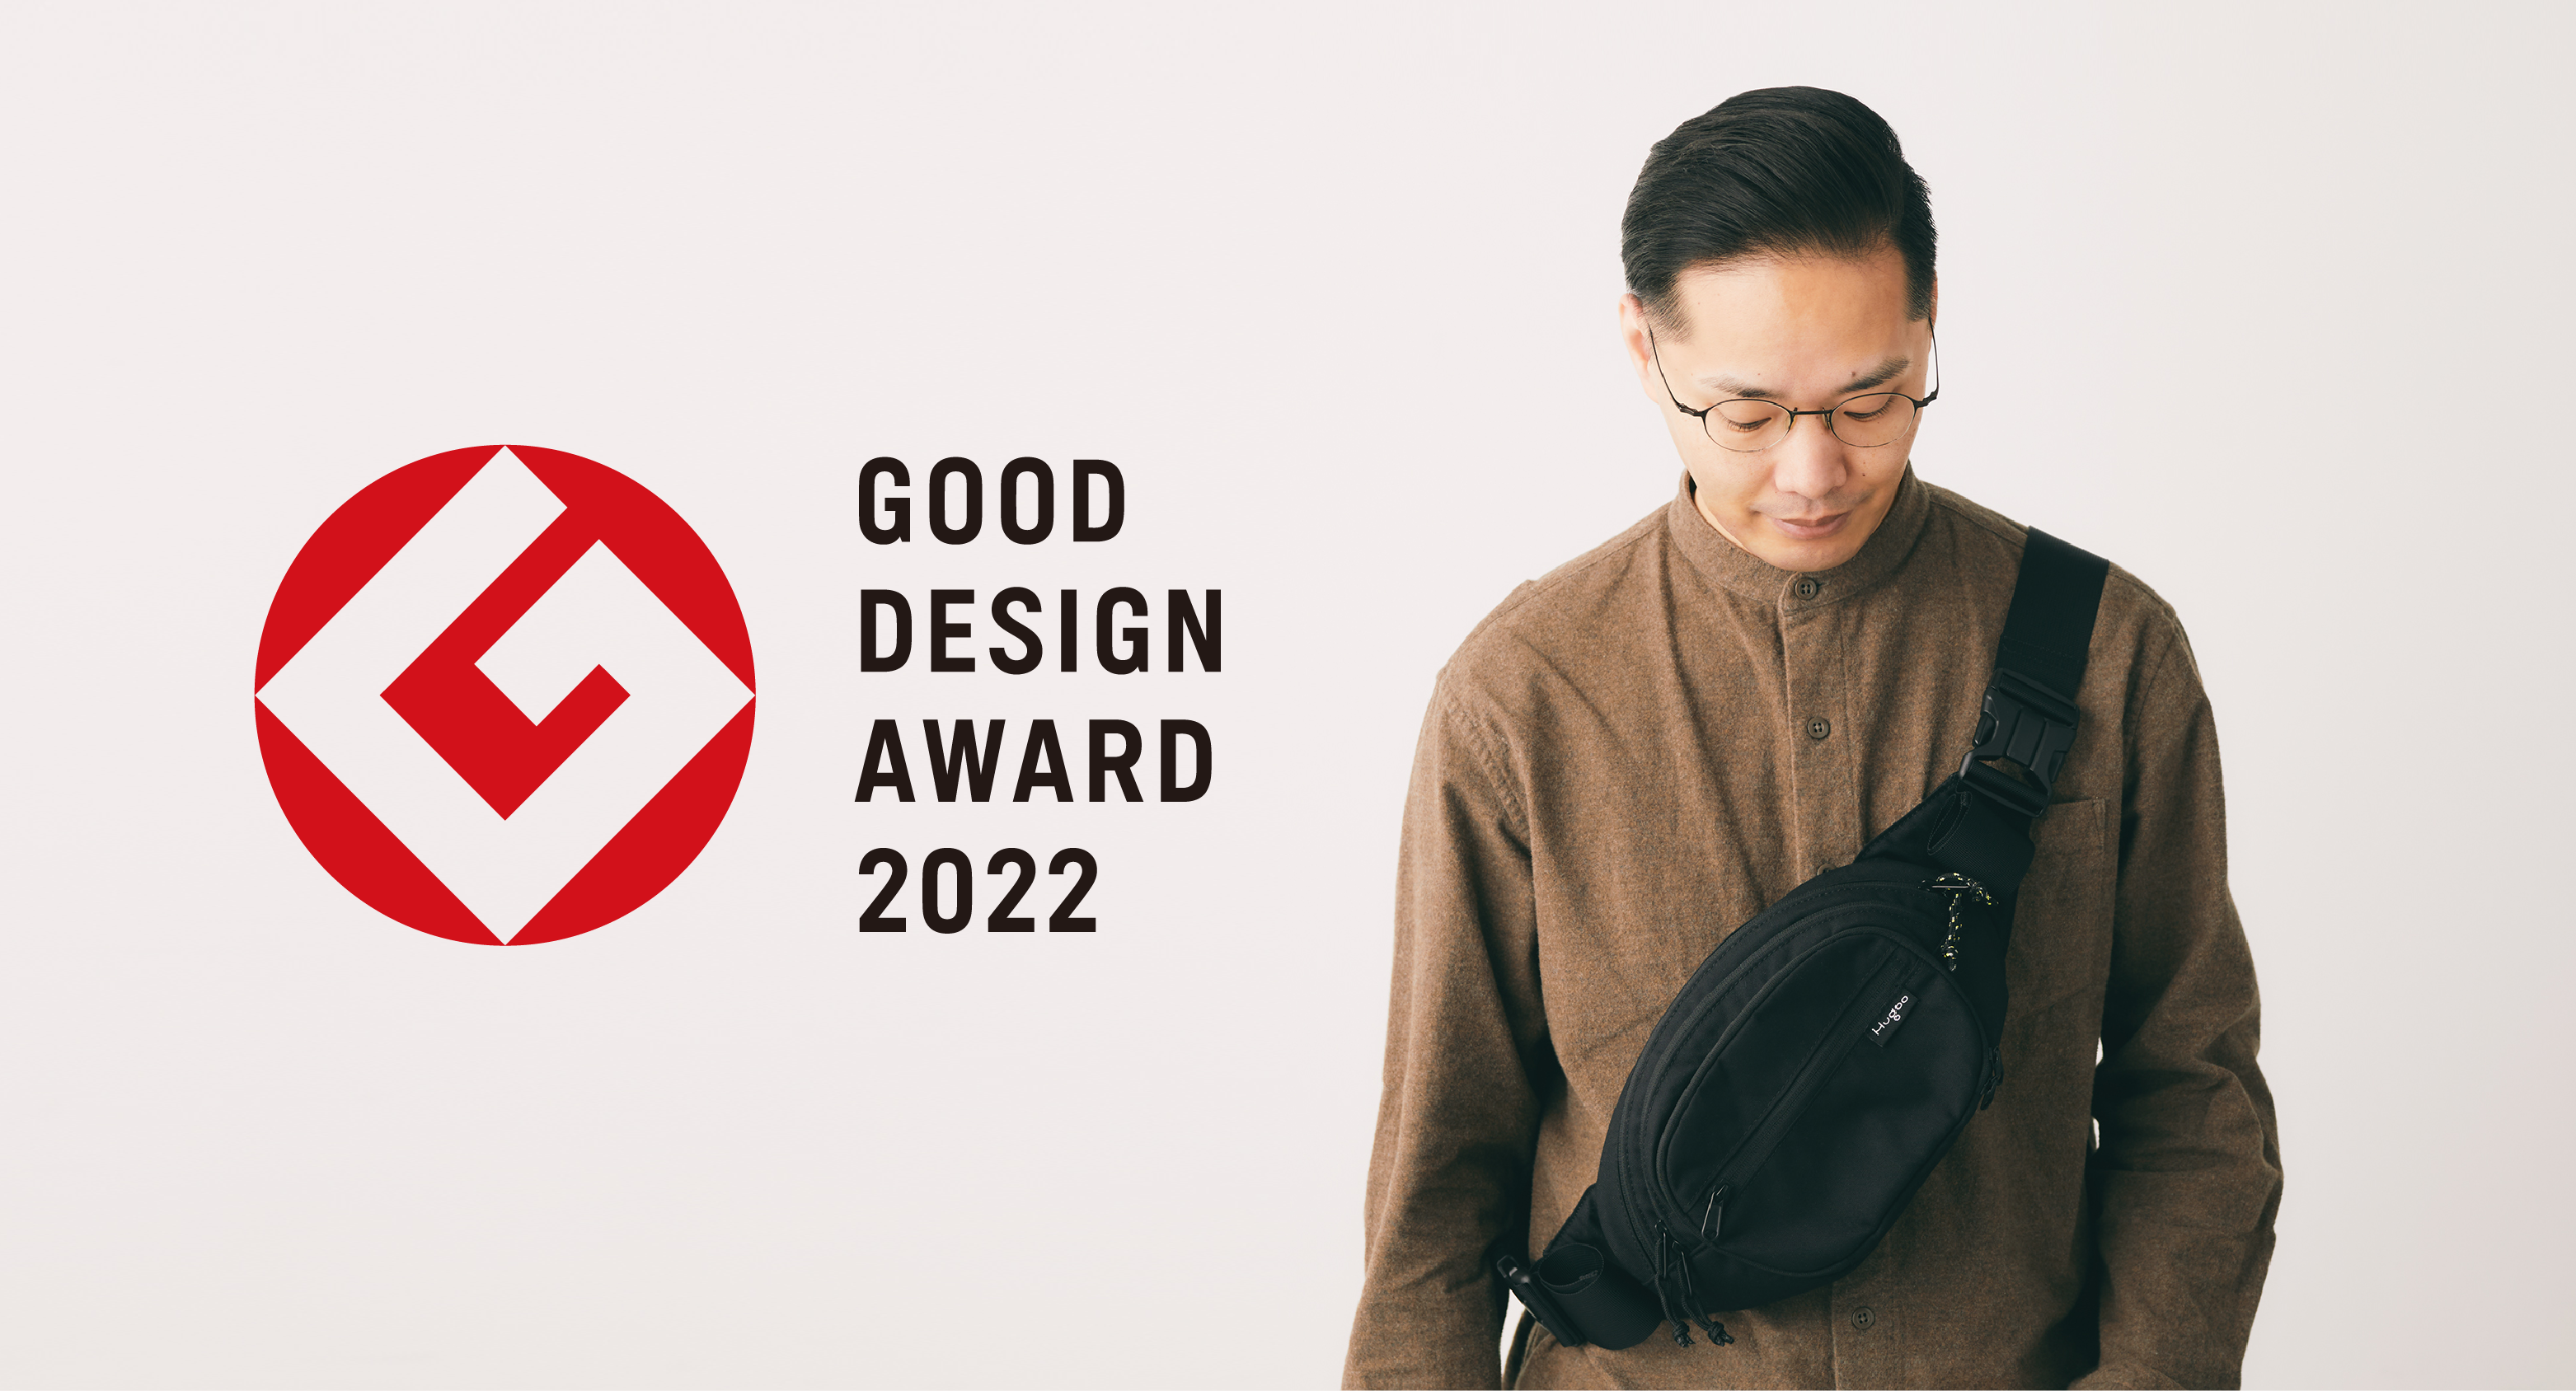 Hugoo ハグーが、「グッドデザイン賞」を受賞しました